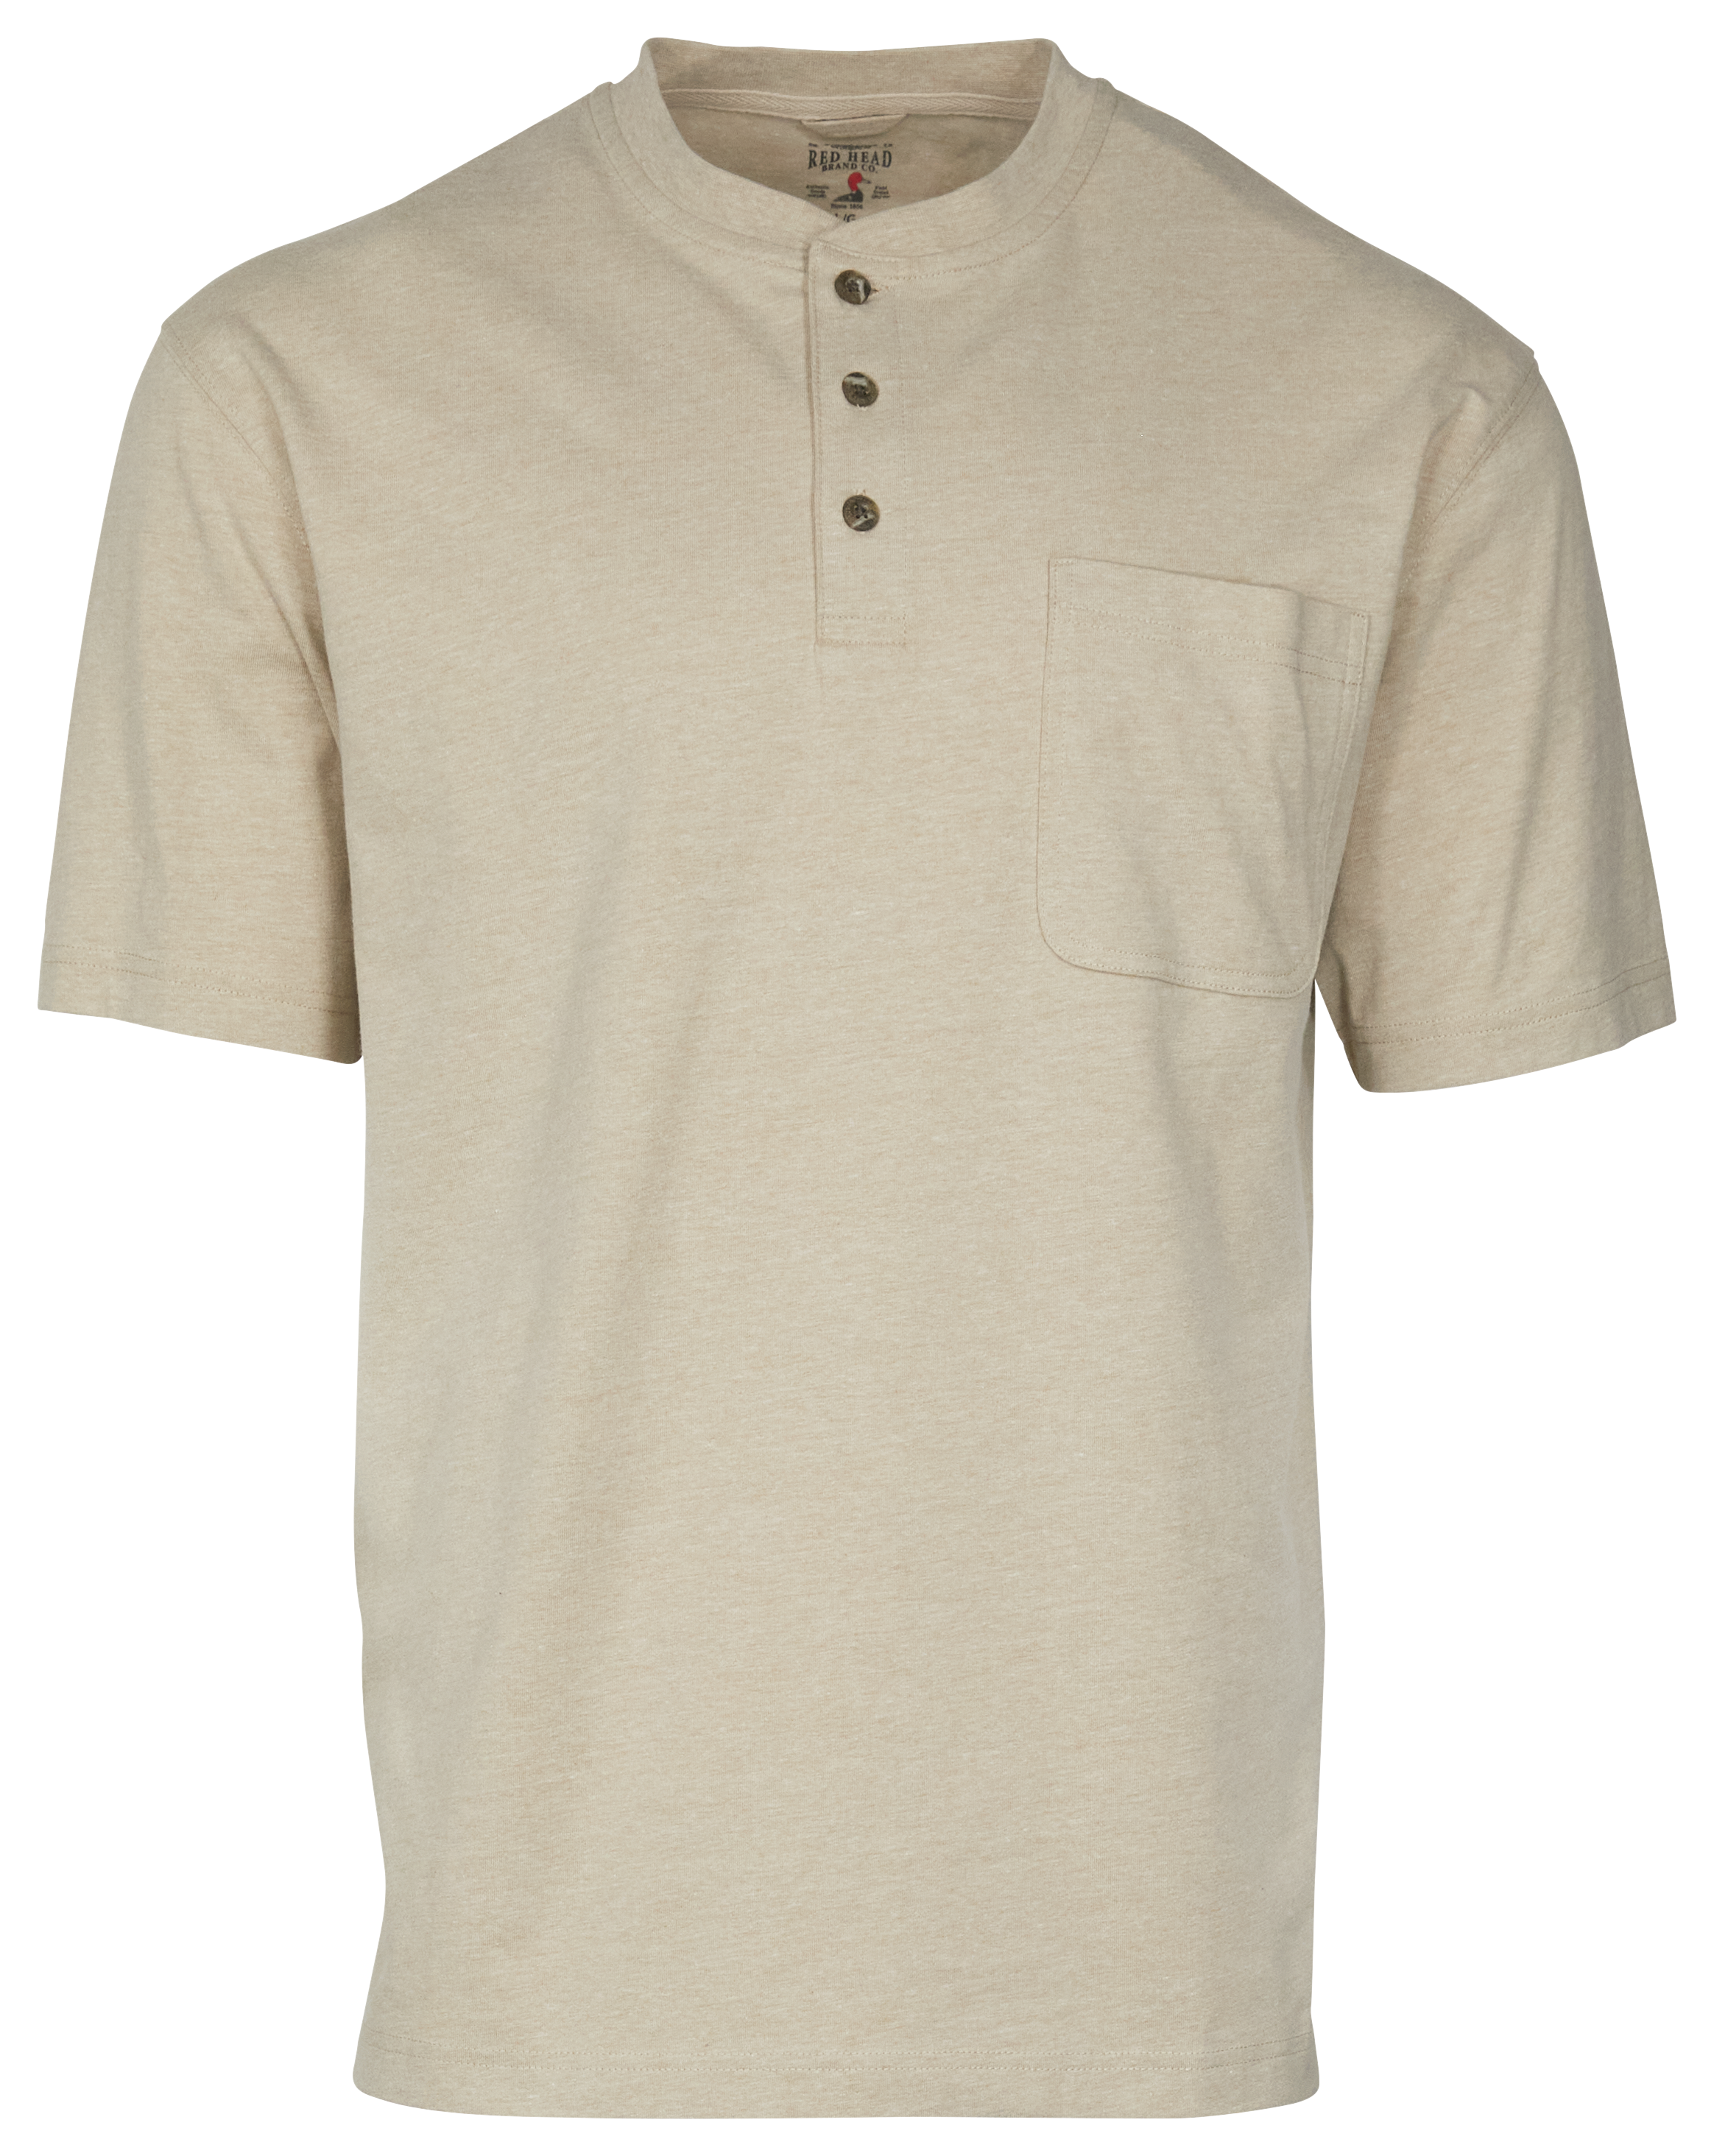 RedHead Henley Pocket Short-Sleeve Shirt for Men - Khaki Heather - LT